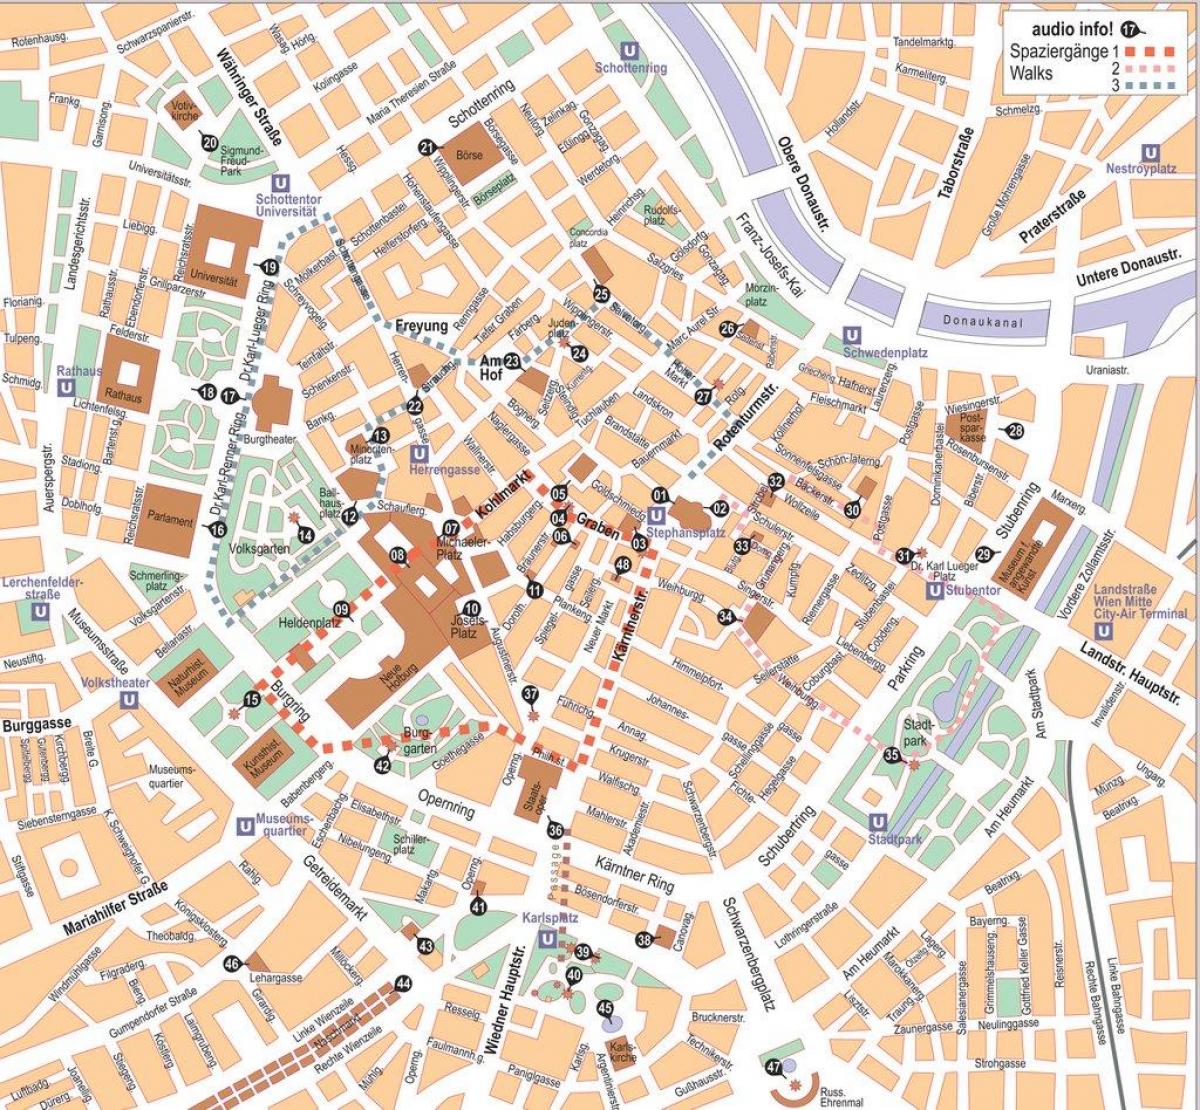 offline mapa Wiednia